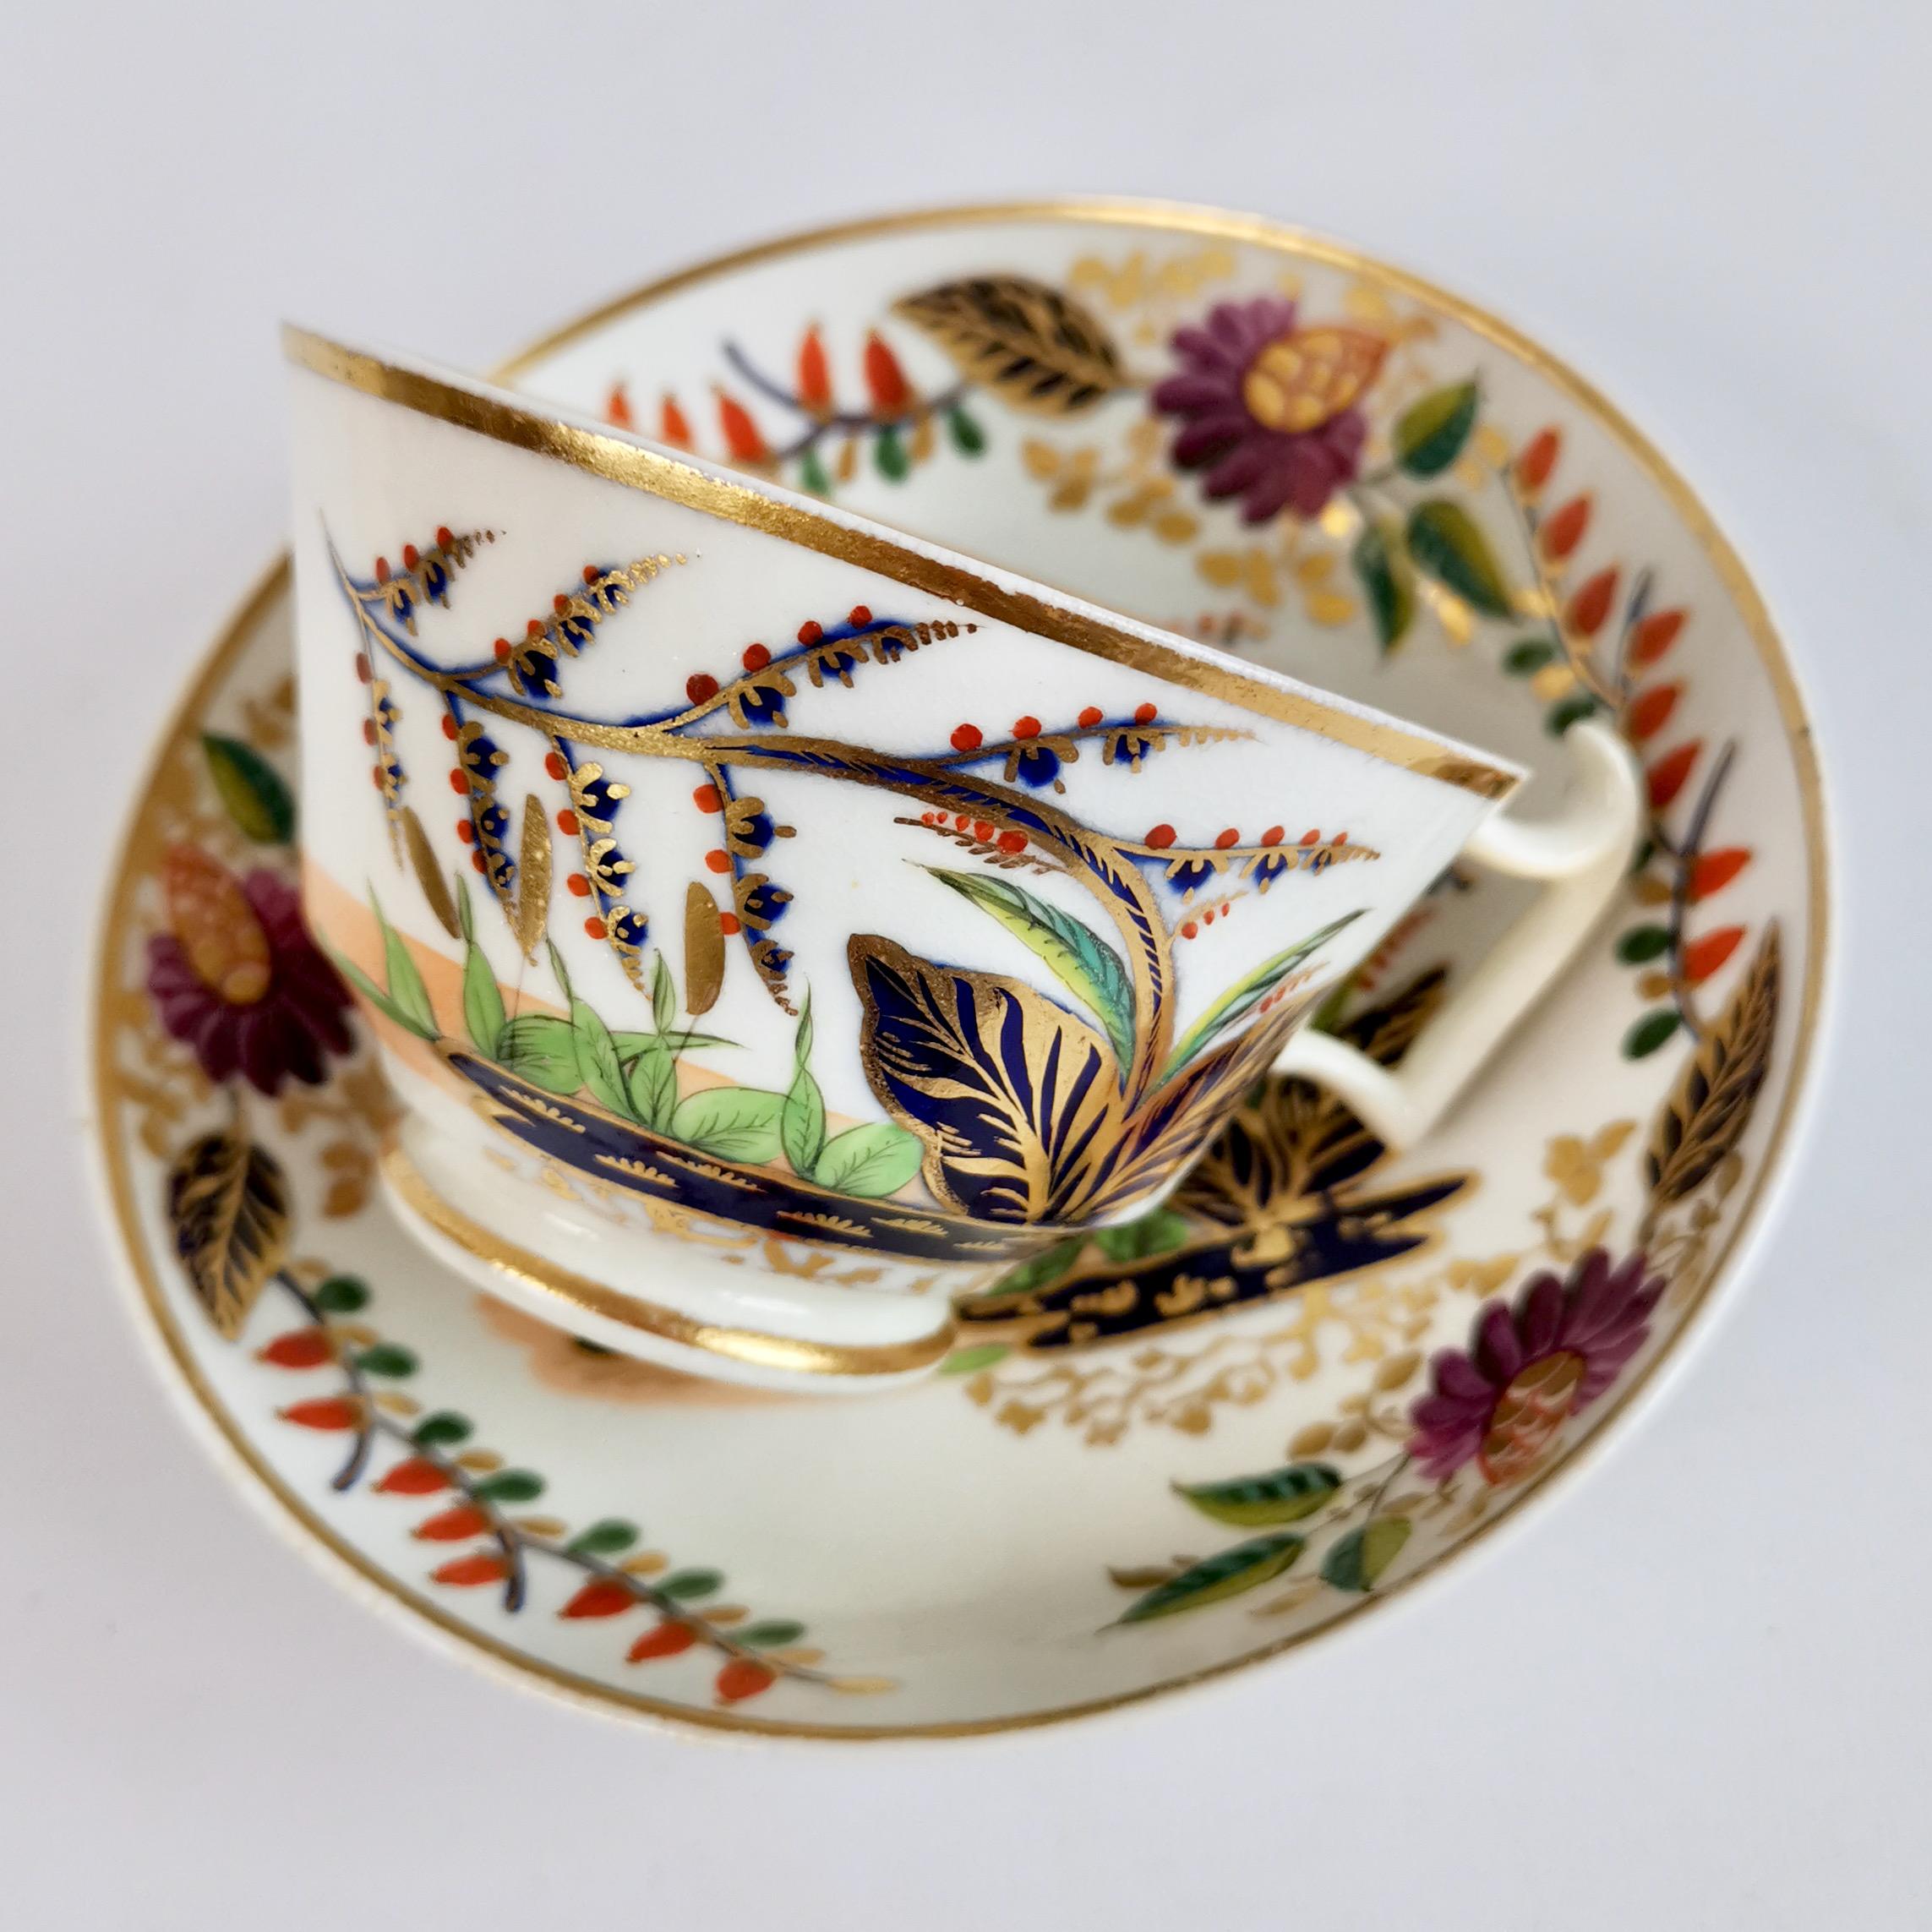 Early 19th Century Derby Porcelain Teacup, Japan Pattern with Ducks, Regency, 1815-1820